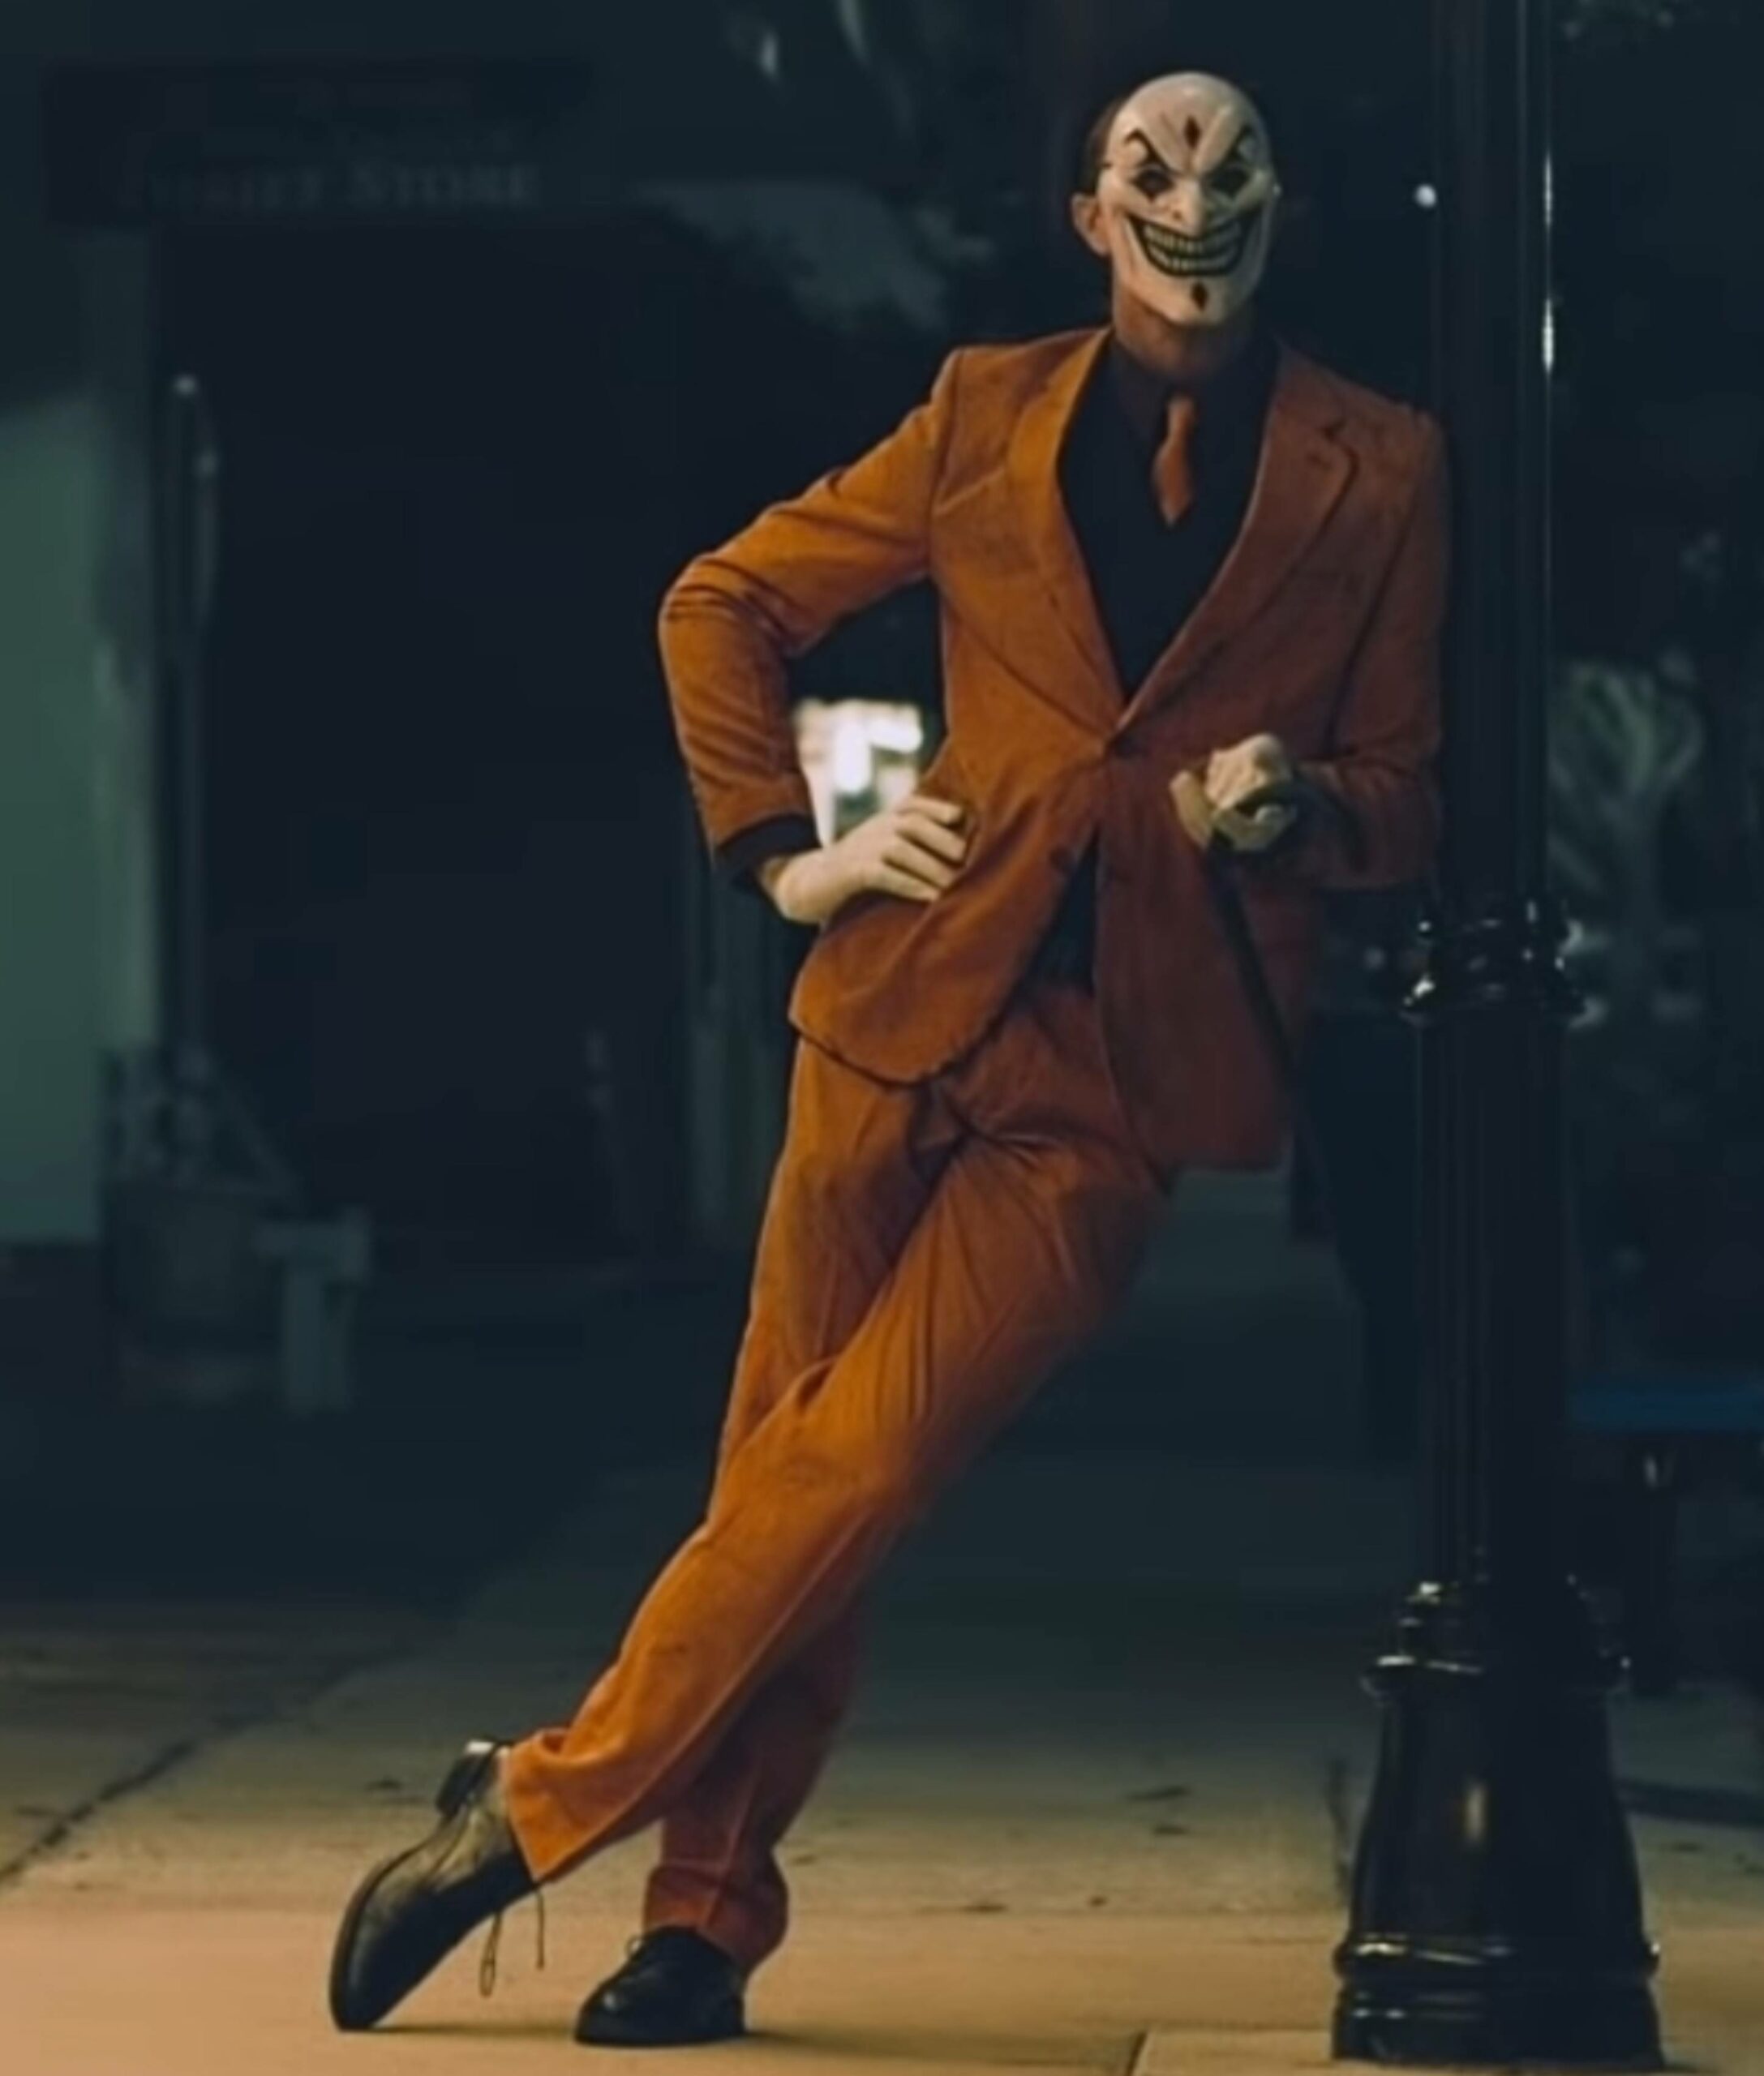 Michael Sheffield The Jester Orange Suit - The Jester Orange Suit